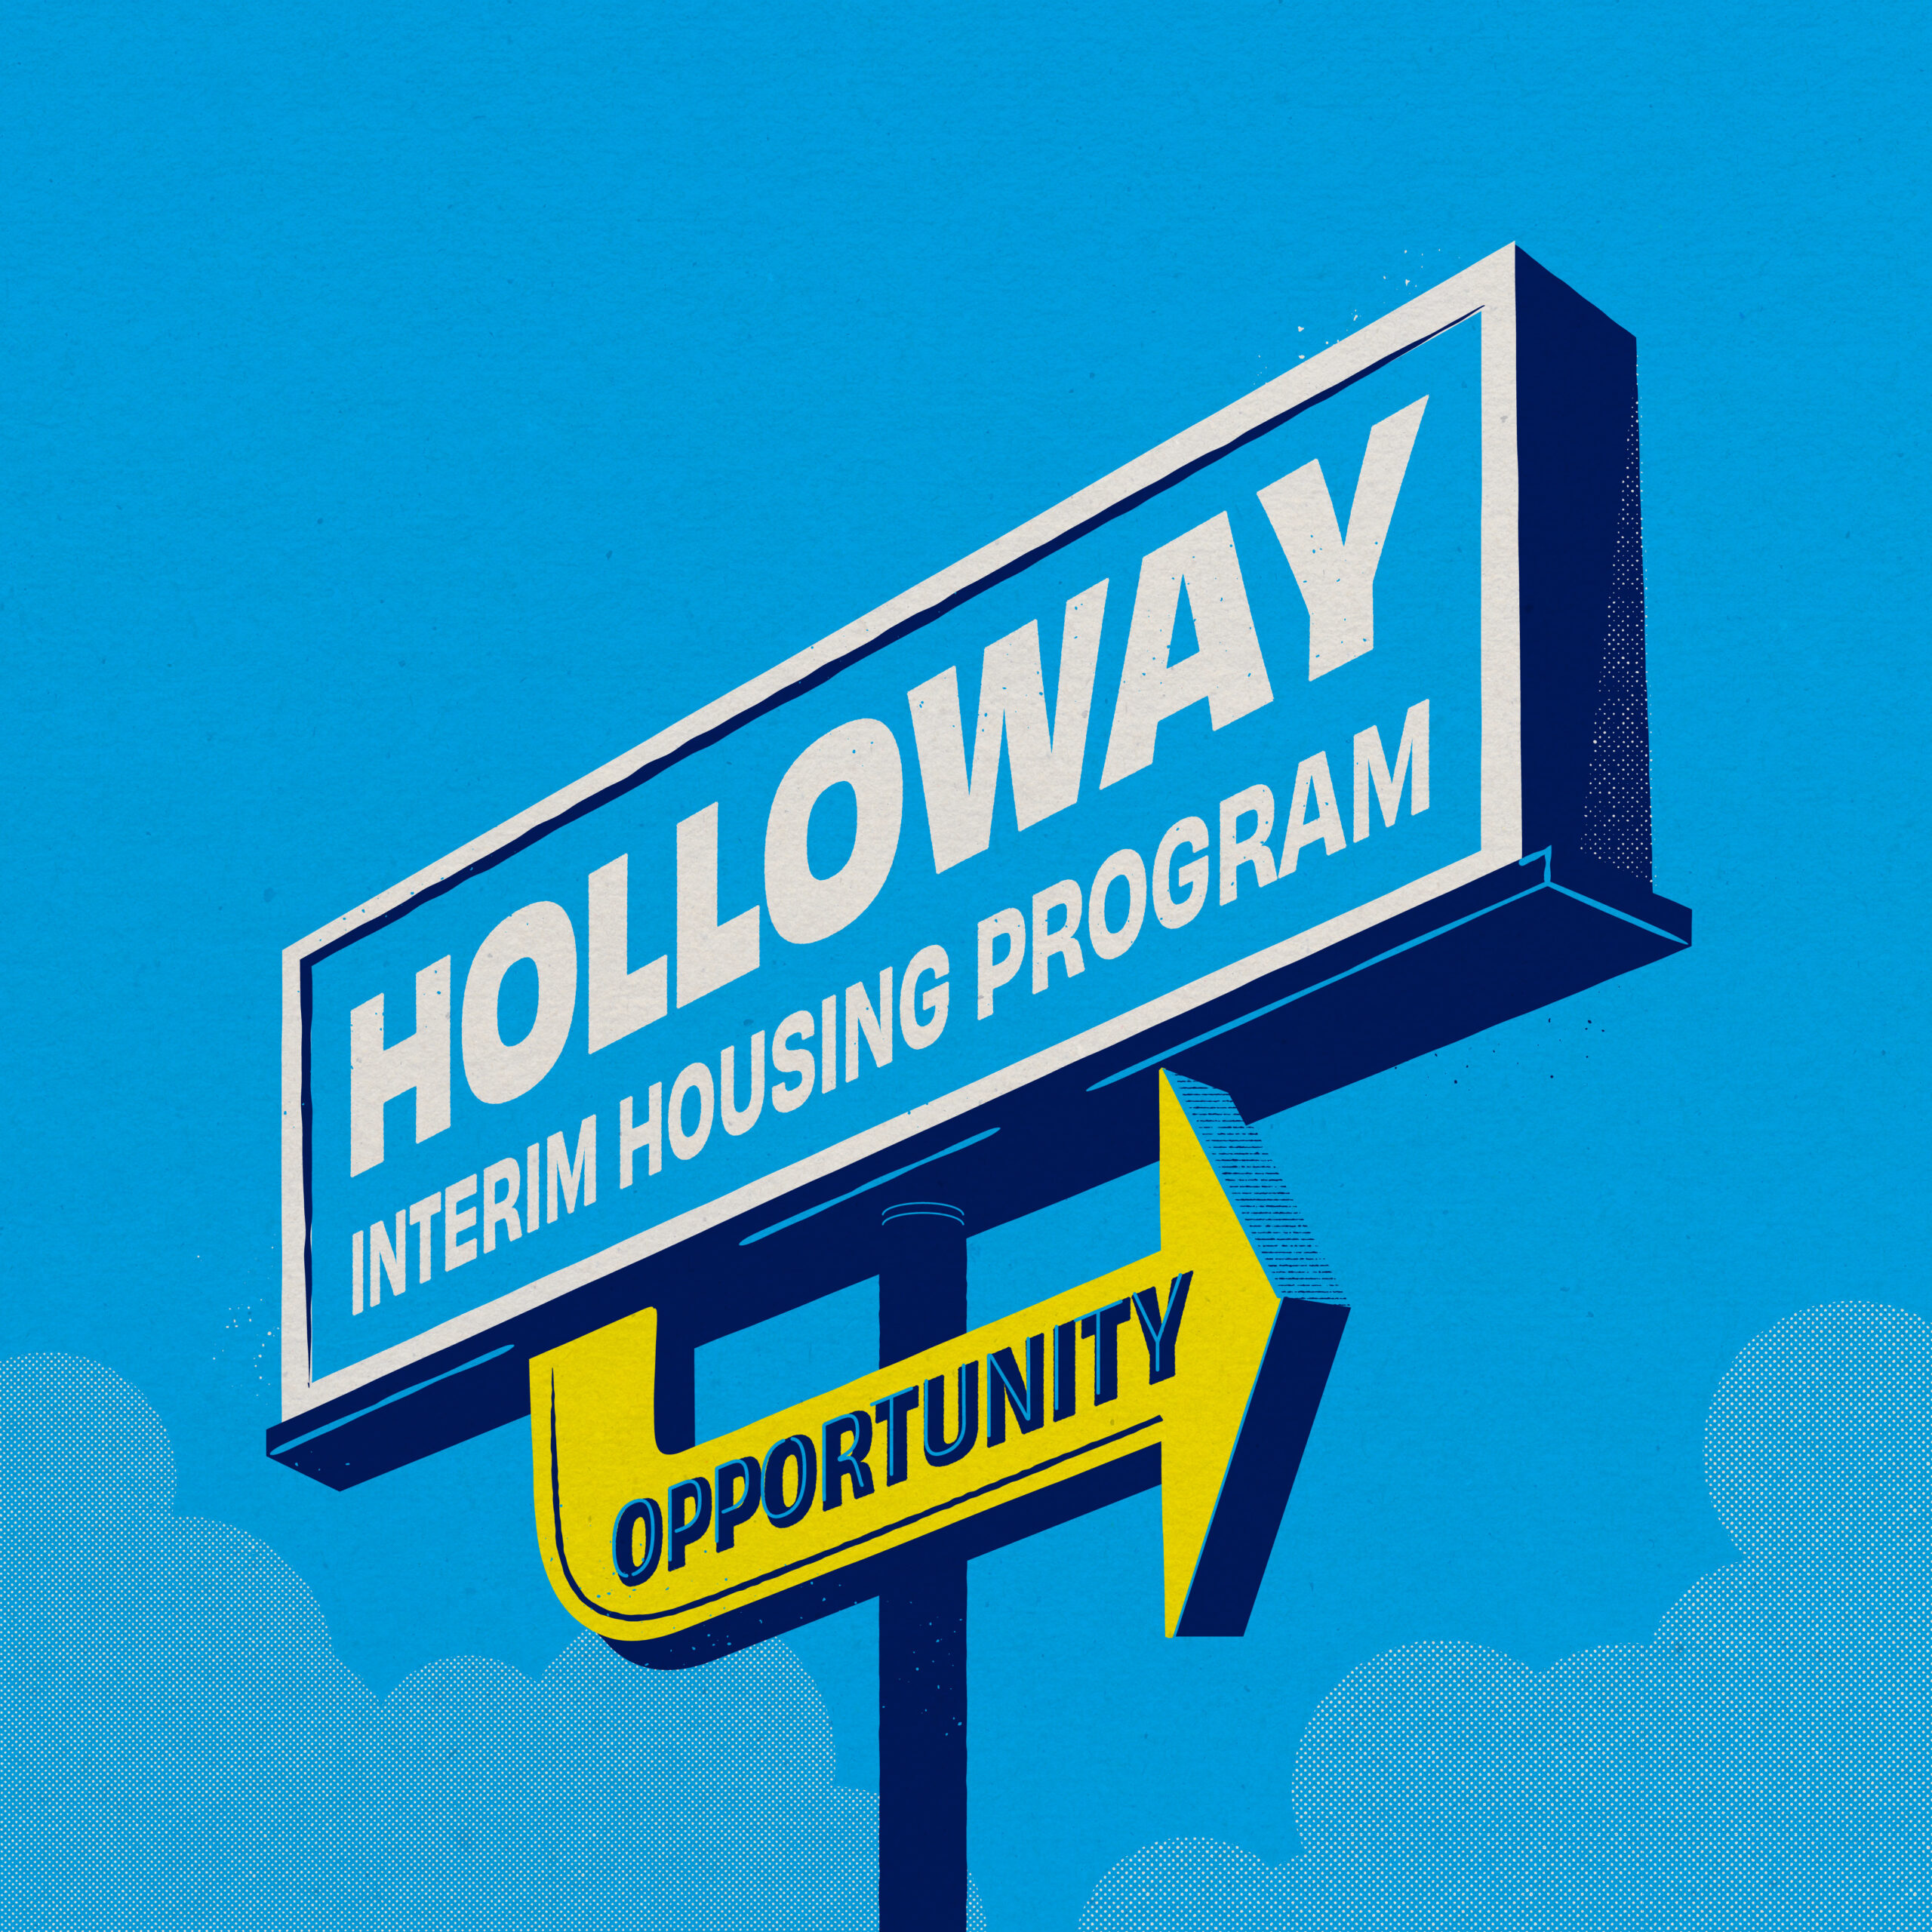 Holloway Interim Housing Program